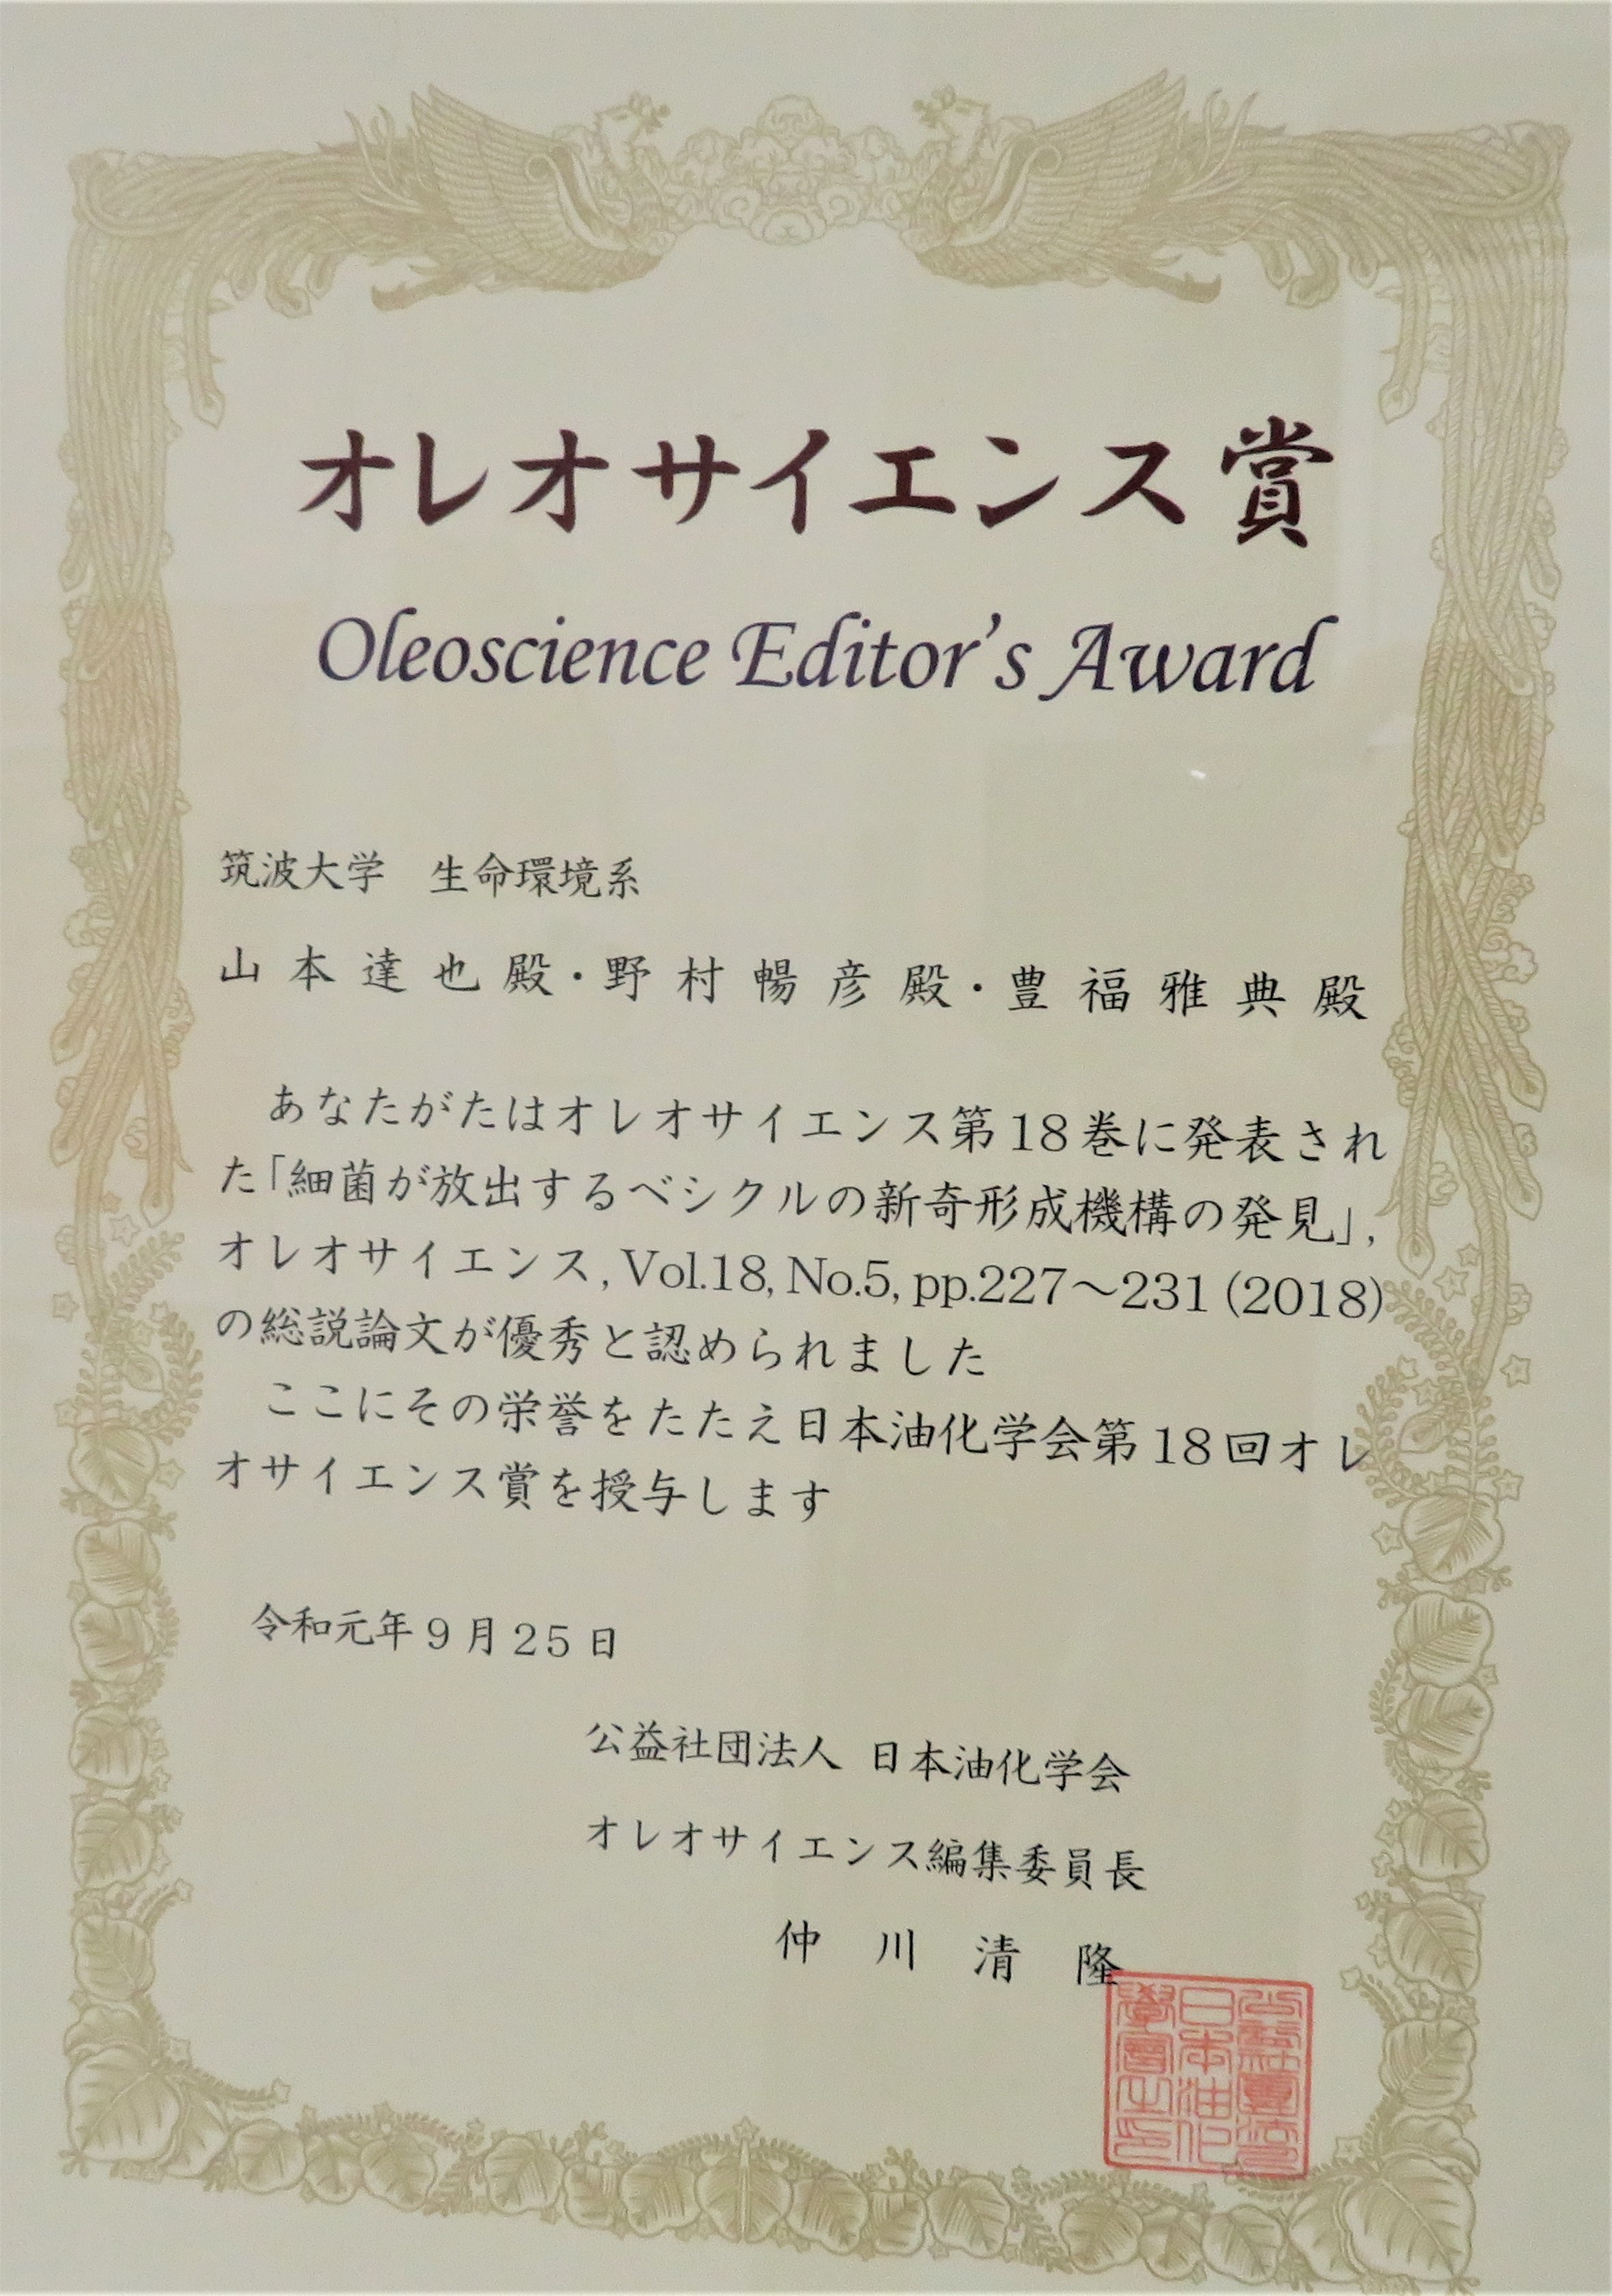 the 18th Japan Oil Chemists' Society Oleo Science Award